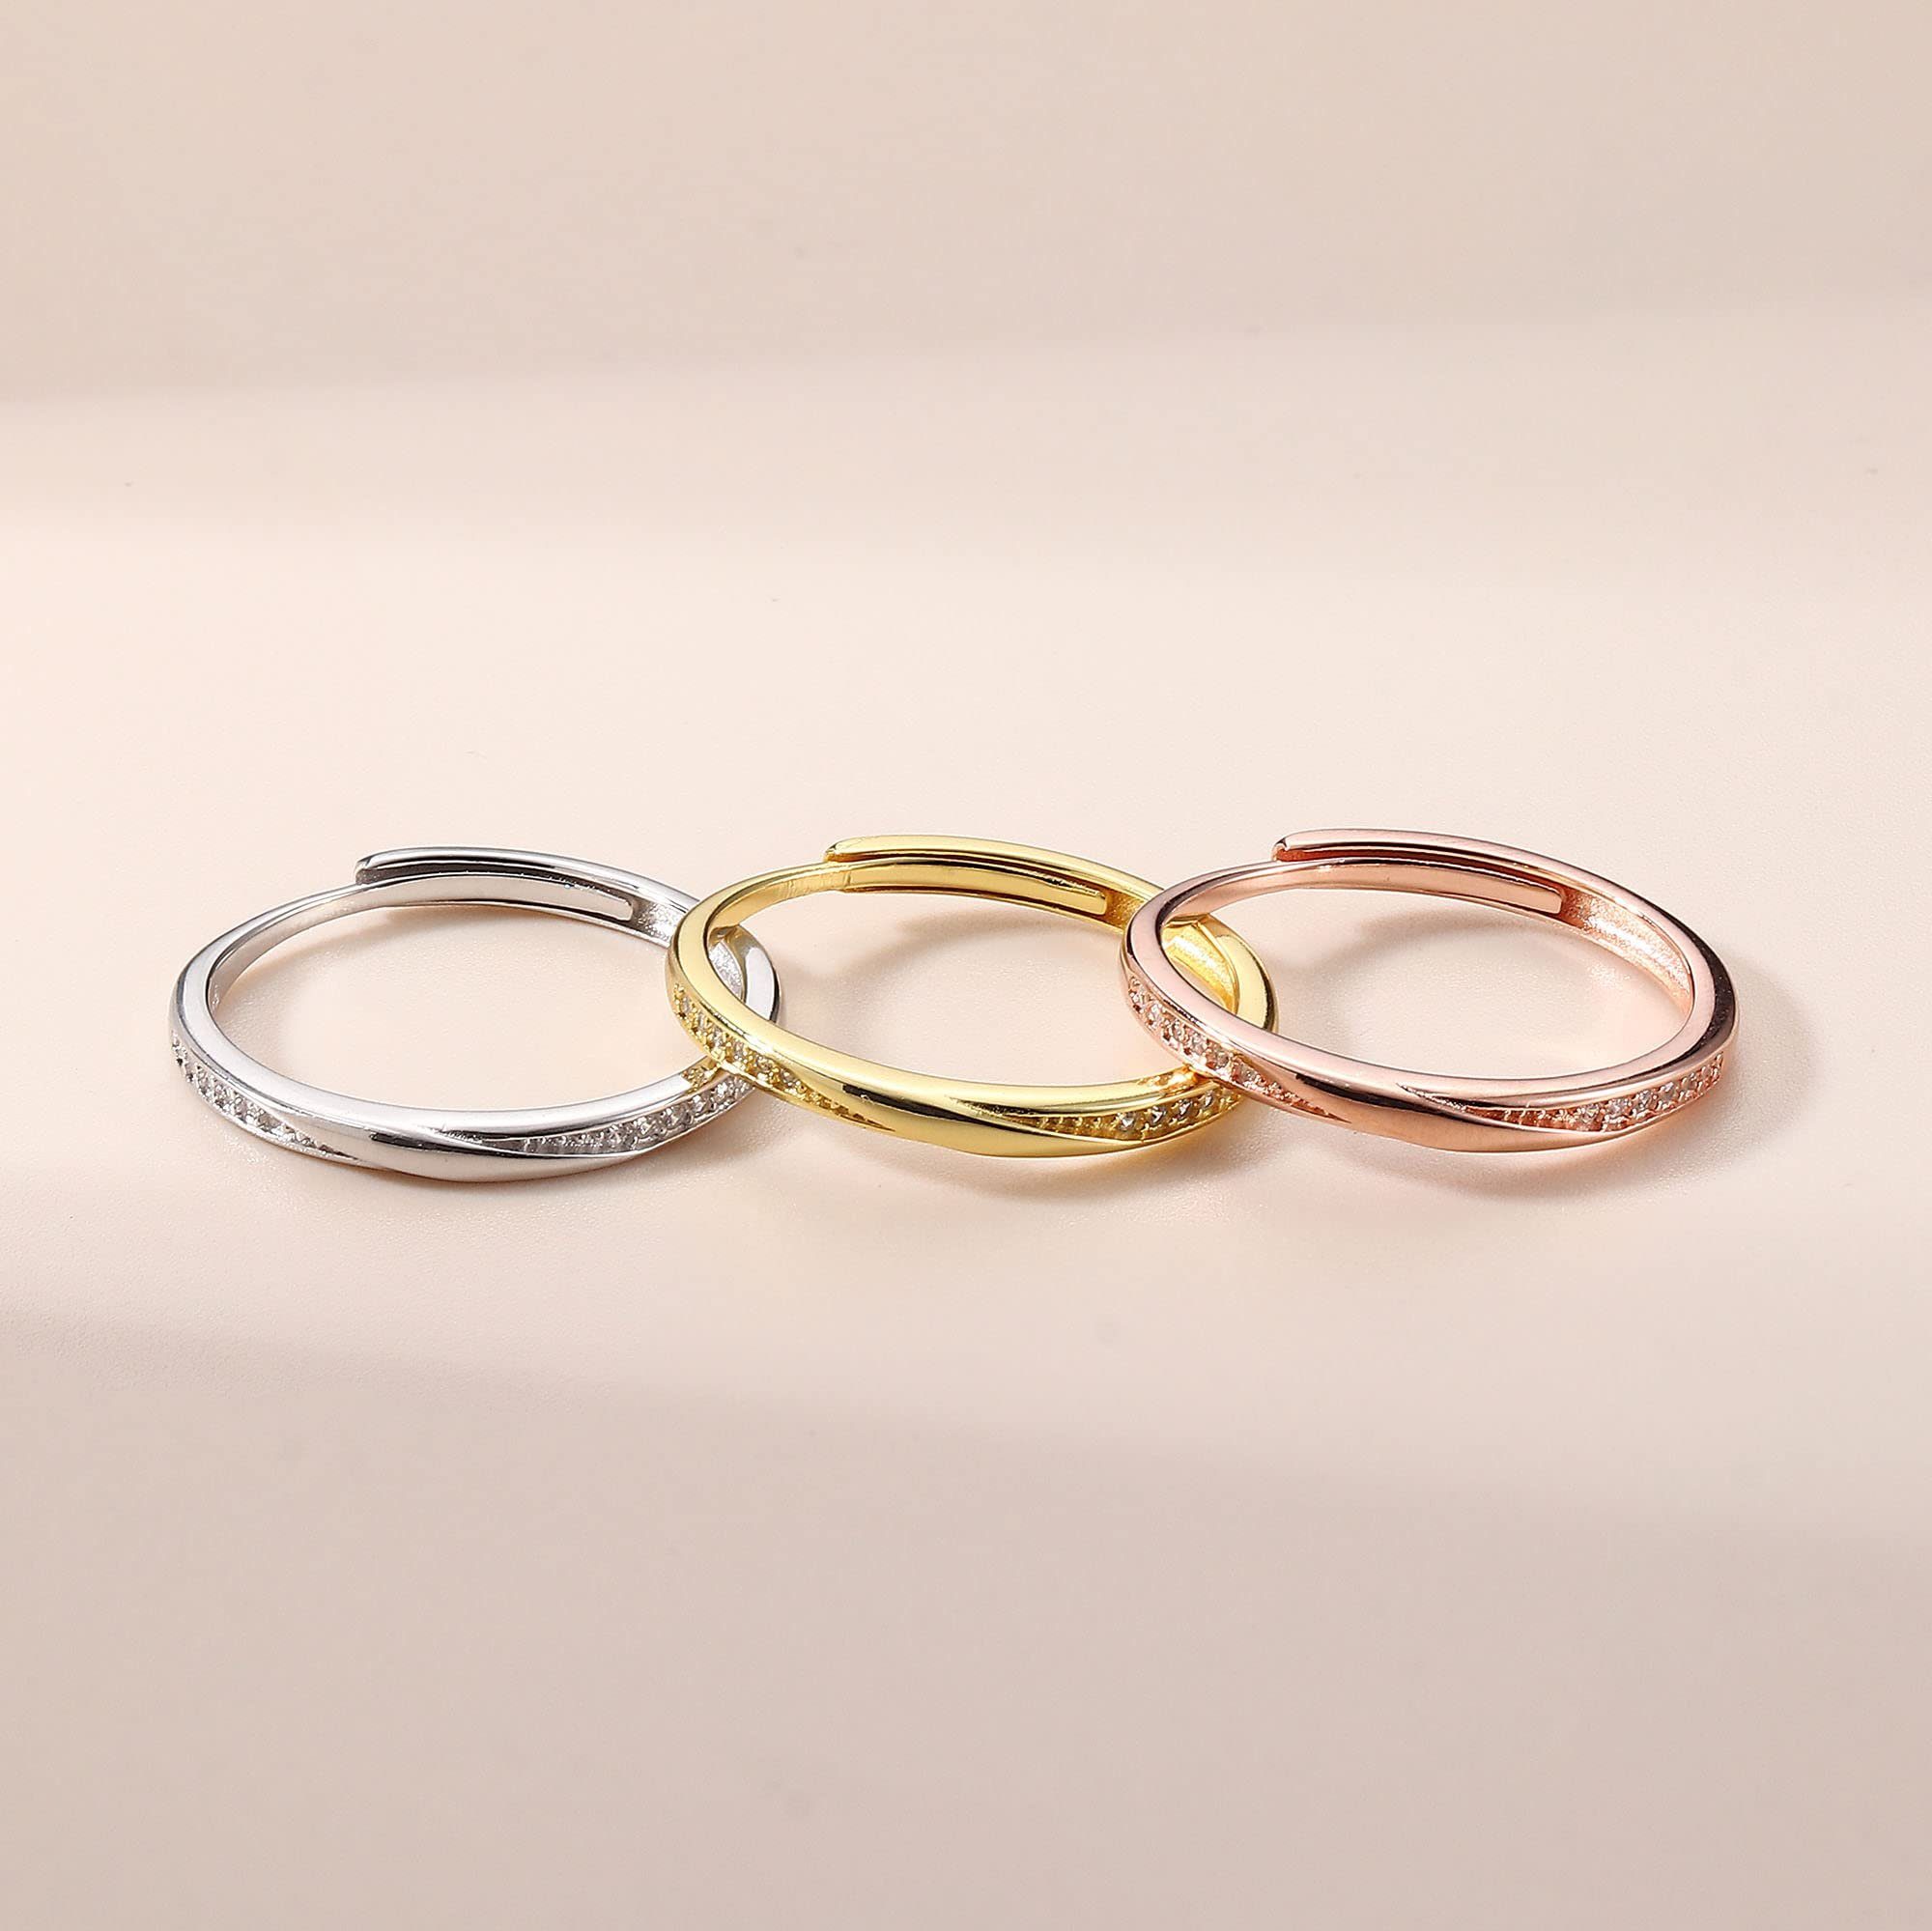 Frauen Mode Ring, POCHUMIDUU für Damen Verstellbarer Silber Fingerring aus Silberschmuck Sterlingsilber 925er Trend 925